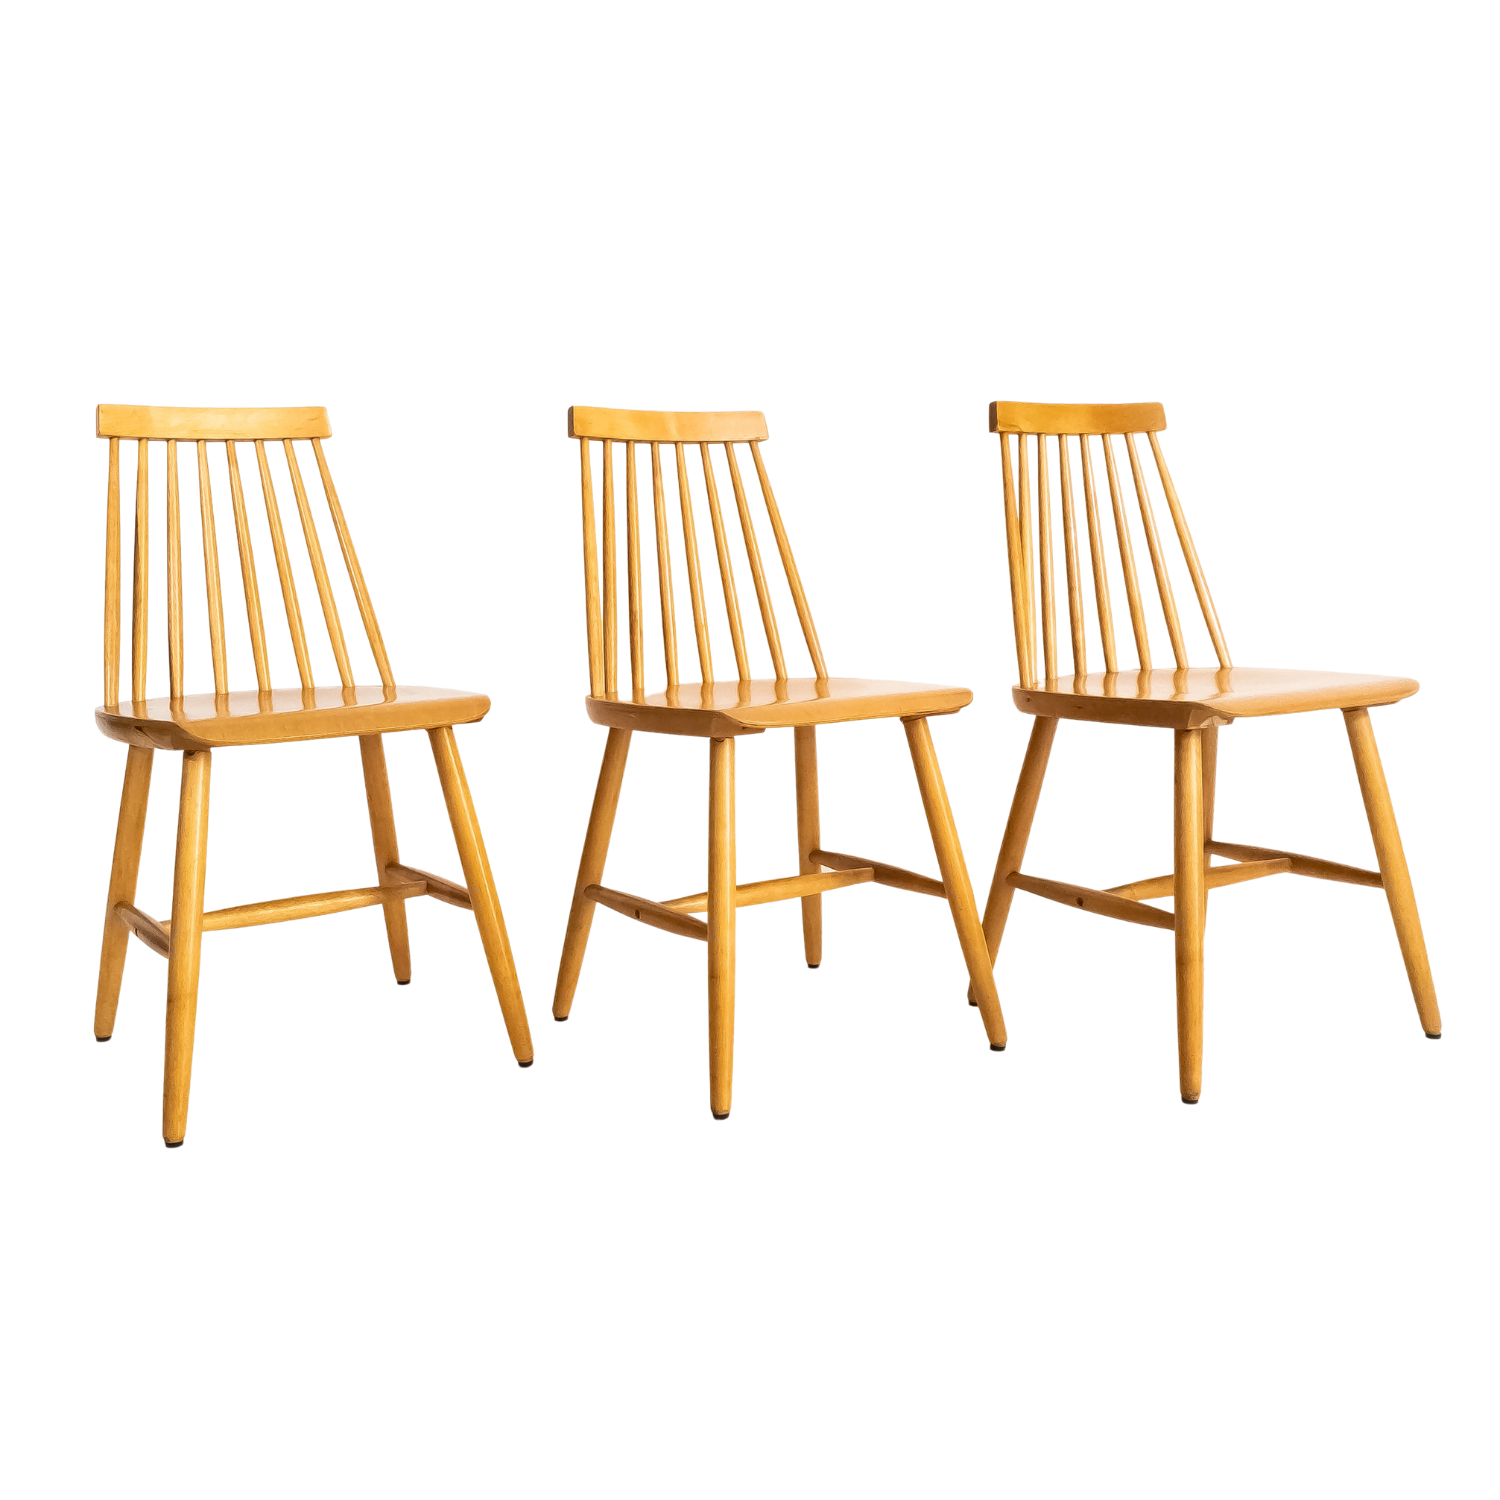 Set of 3 Pinnstol chairs in birch, 1960s